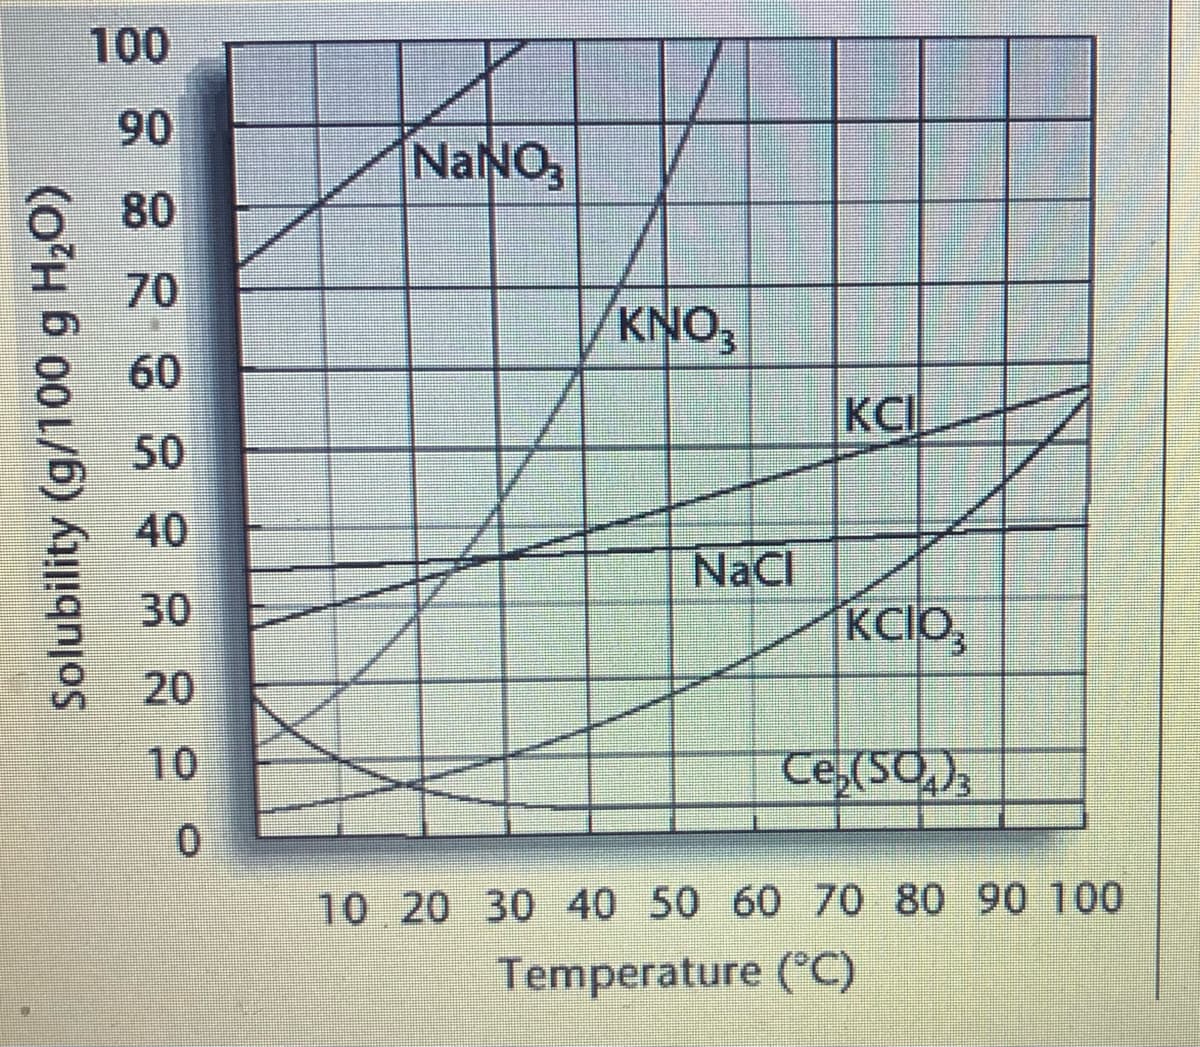 100
90
NaNO
80
70
KNO,
60
KCI
50
40
NaCl
30
KCIO,
20
10
Ce,(SO.),
10 20 30 40 50 60 70 80 90 100
Temperature (°C)
Solubility (g/100 g H,O)
